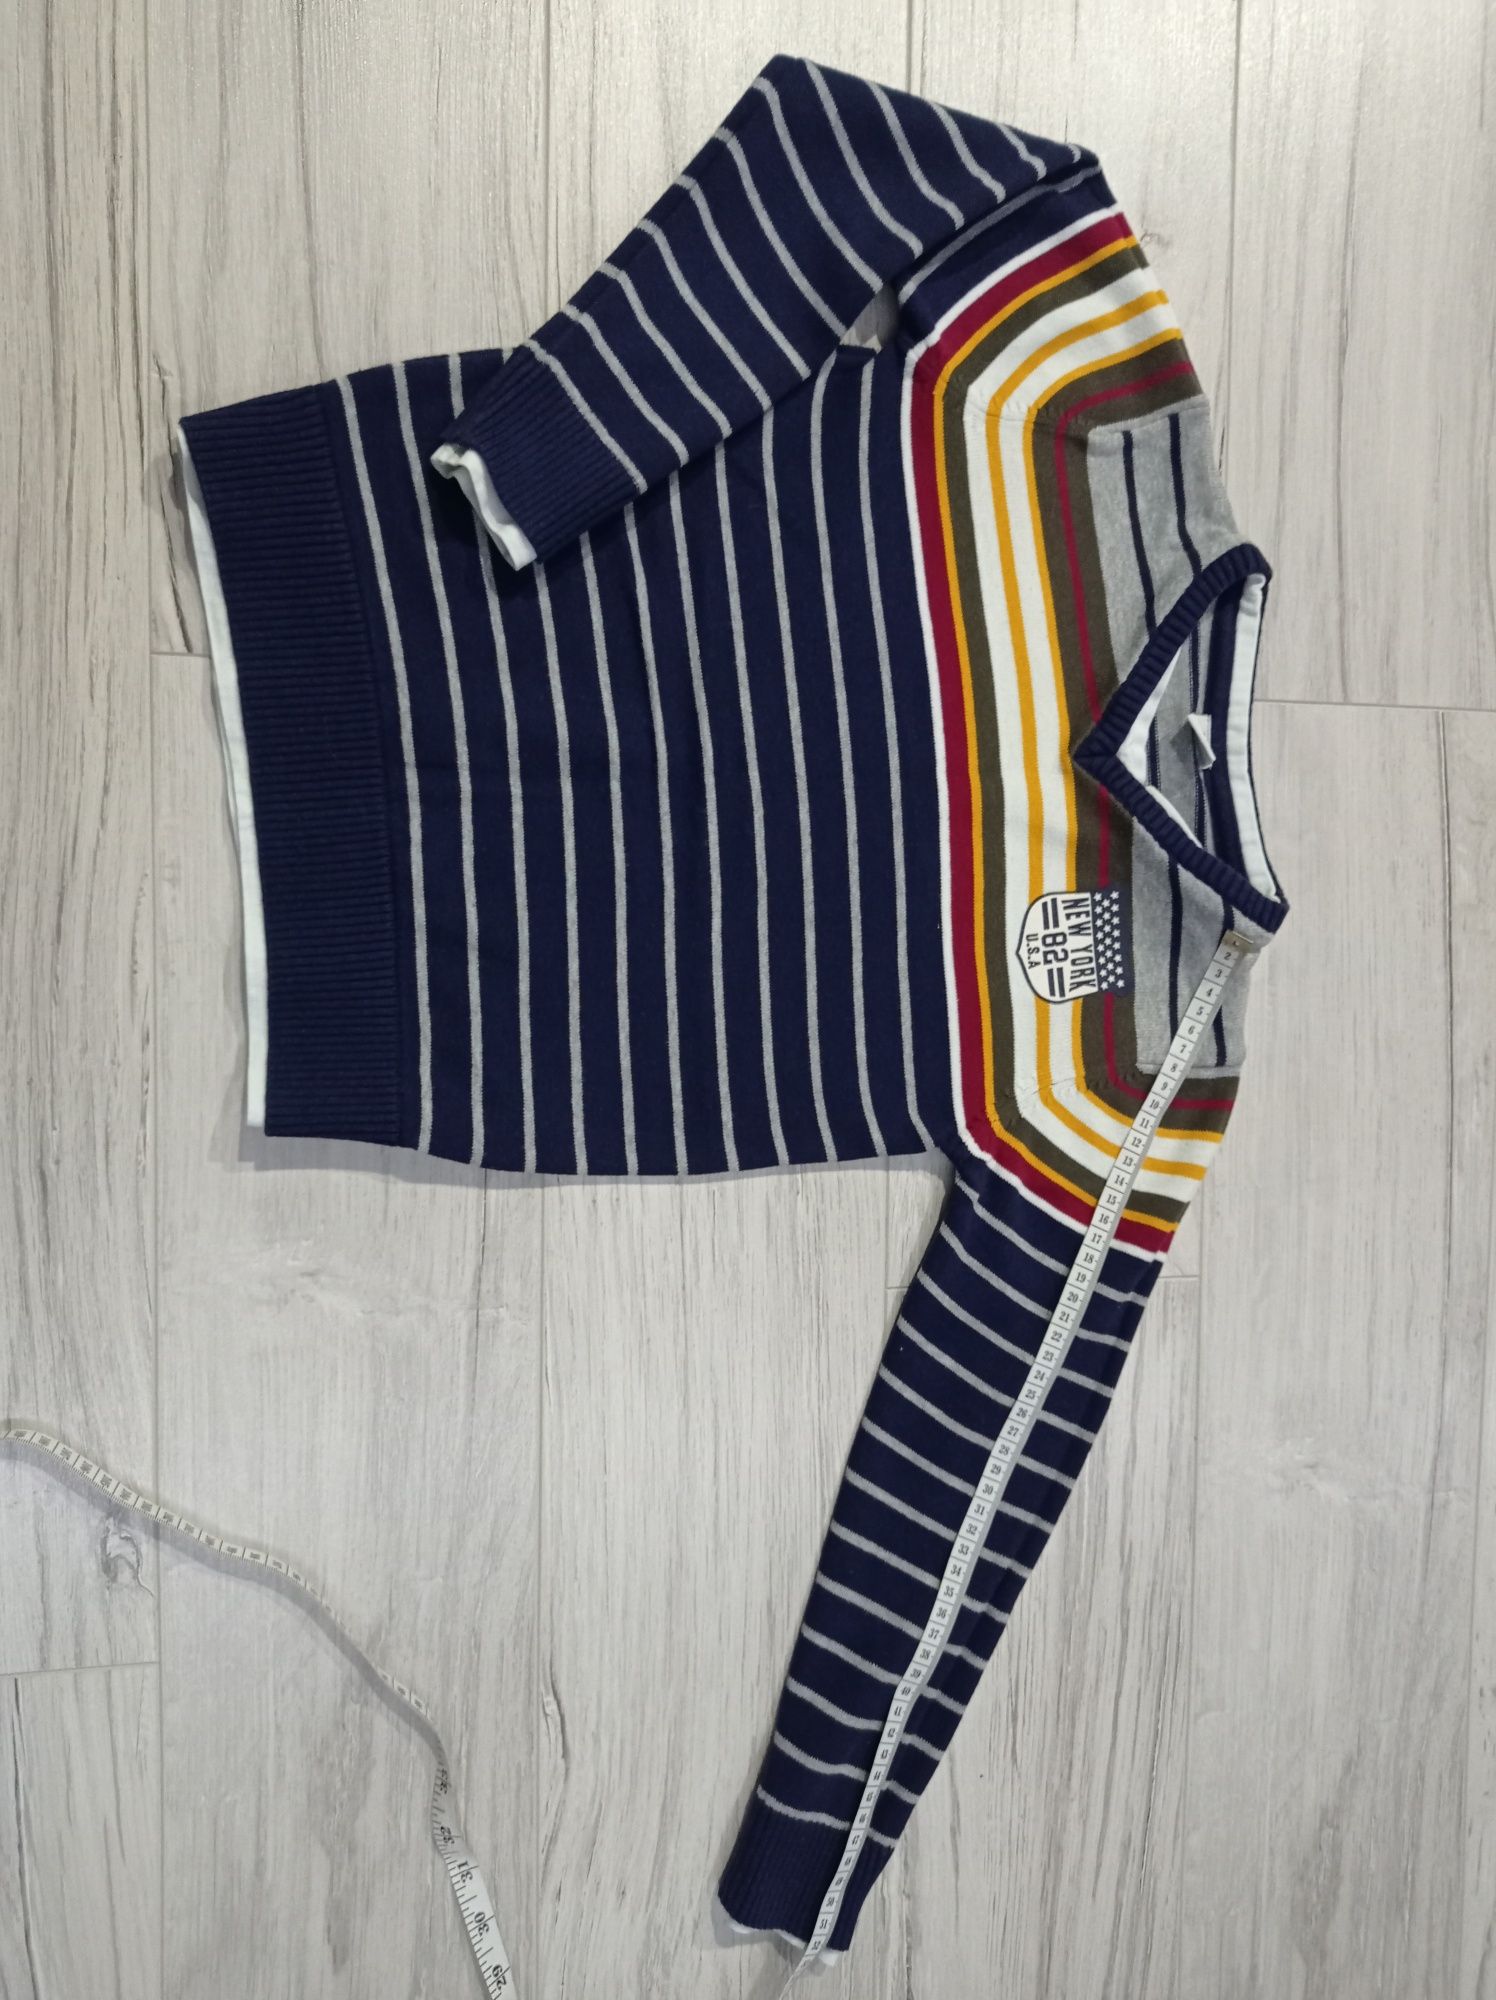 Elegancki sweterek w paski, X-Mail, 128 cm